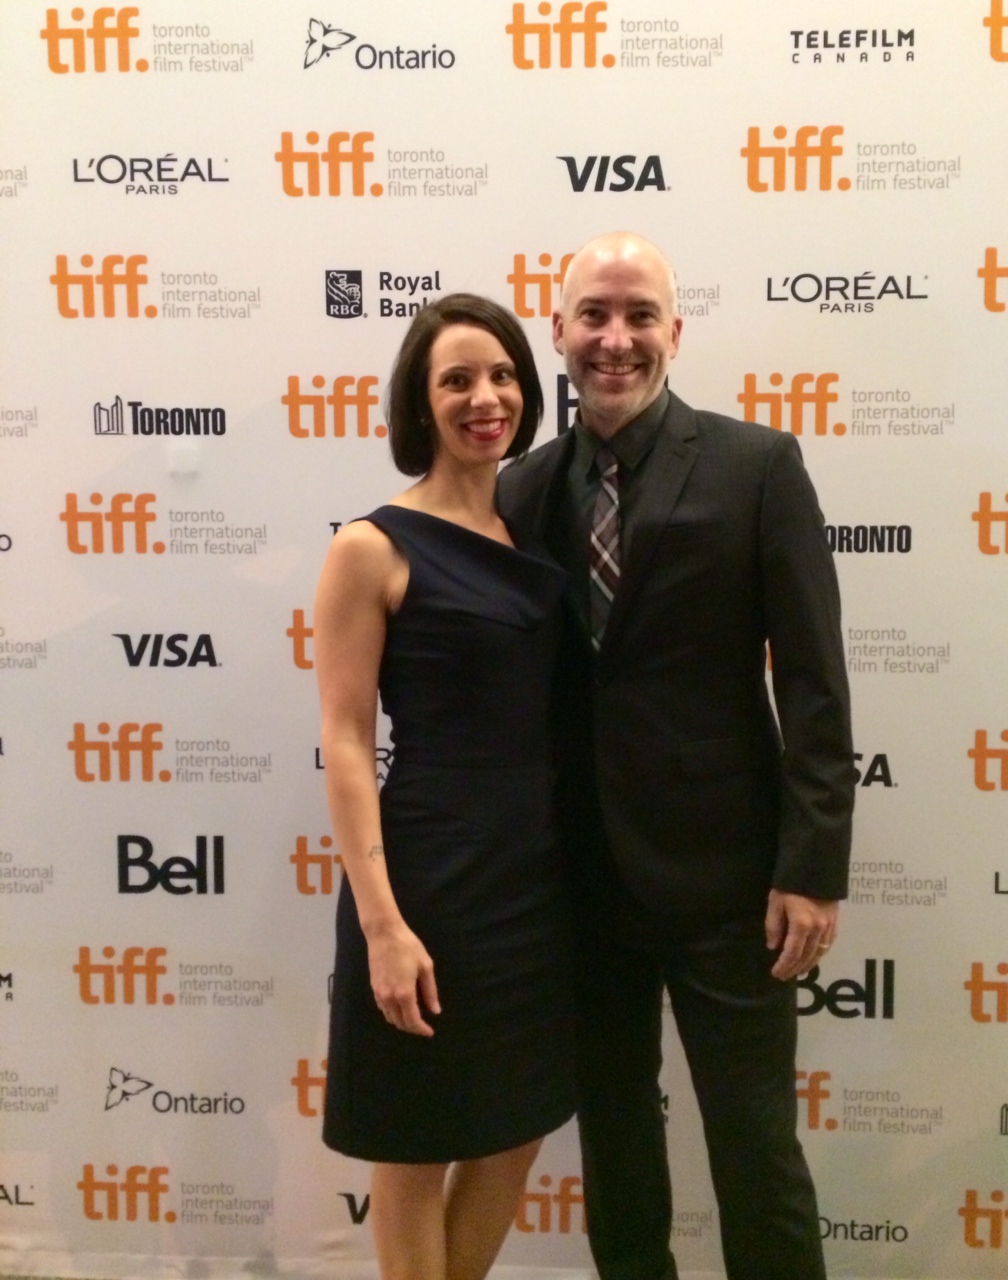 World Premier of The Equalizer at Toronto International Film Festival